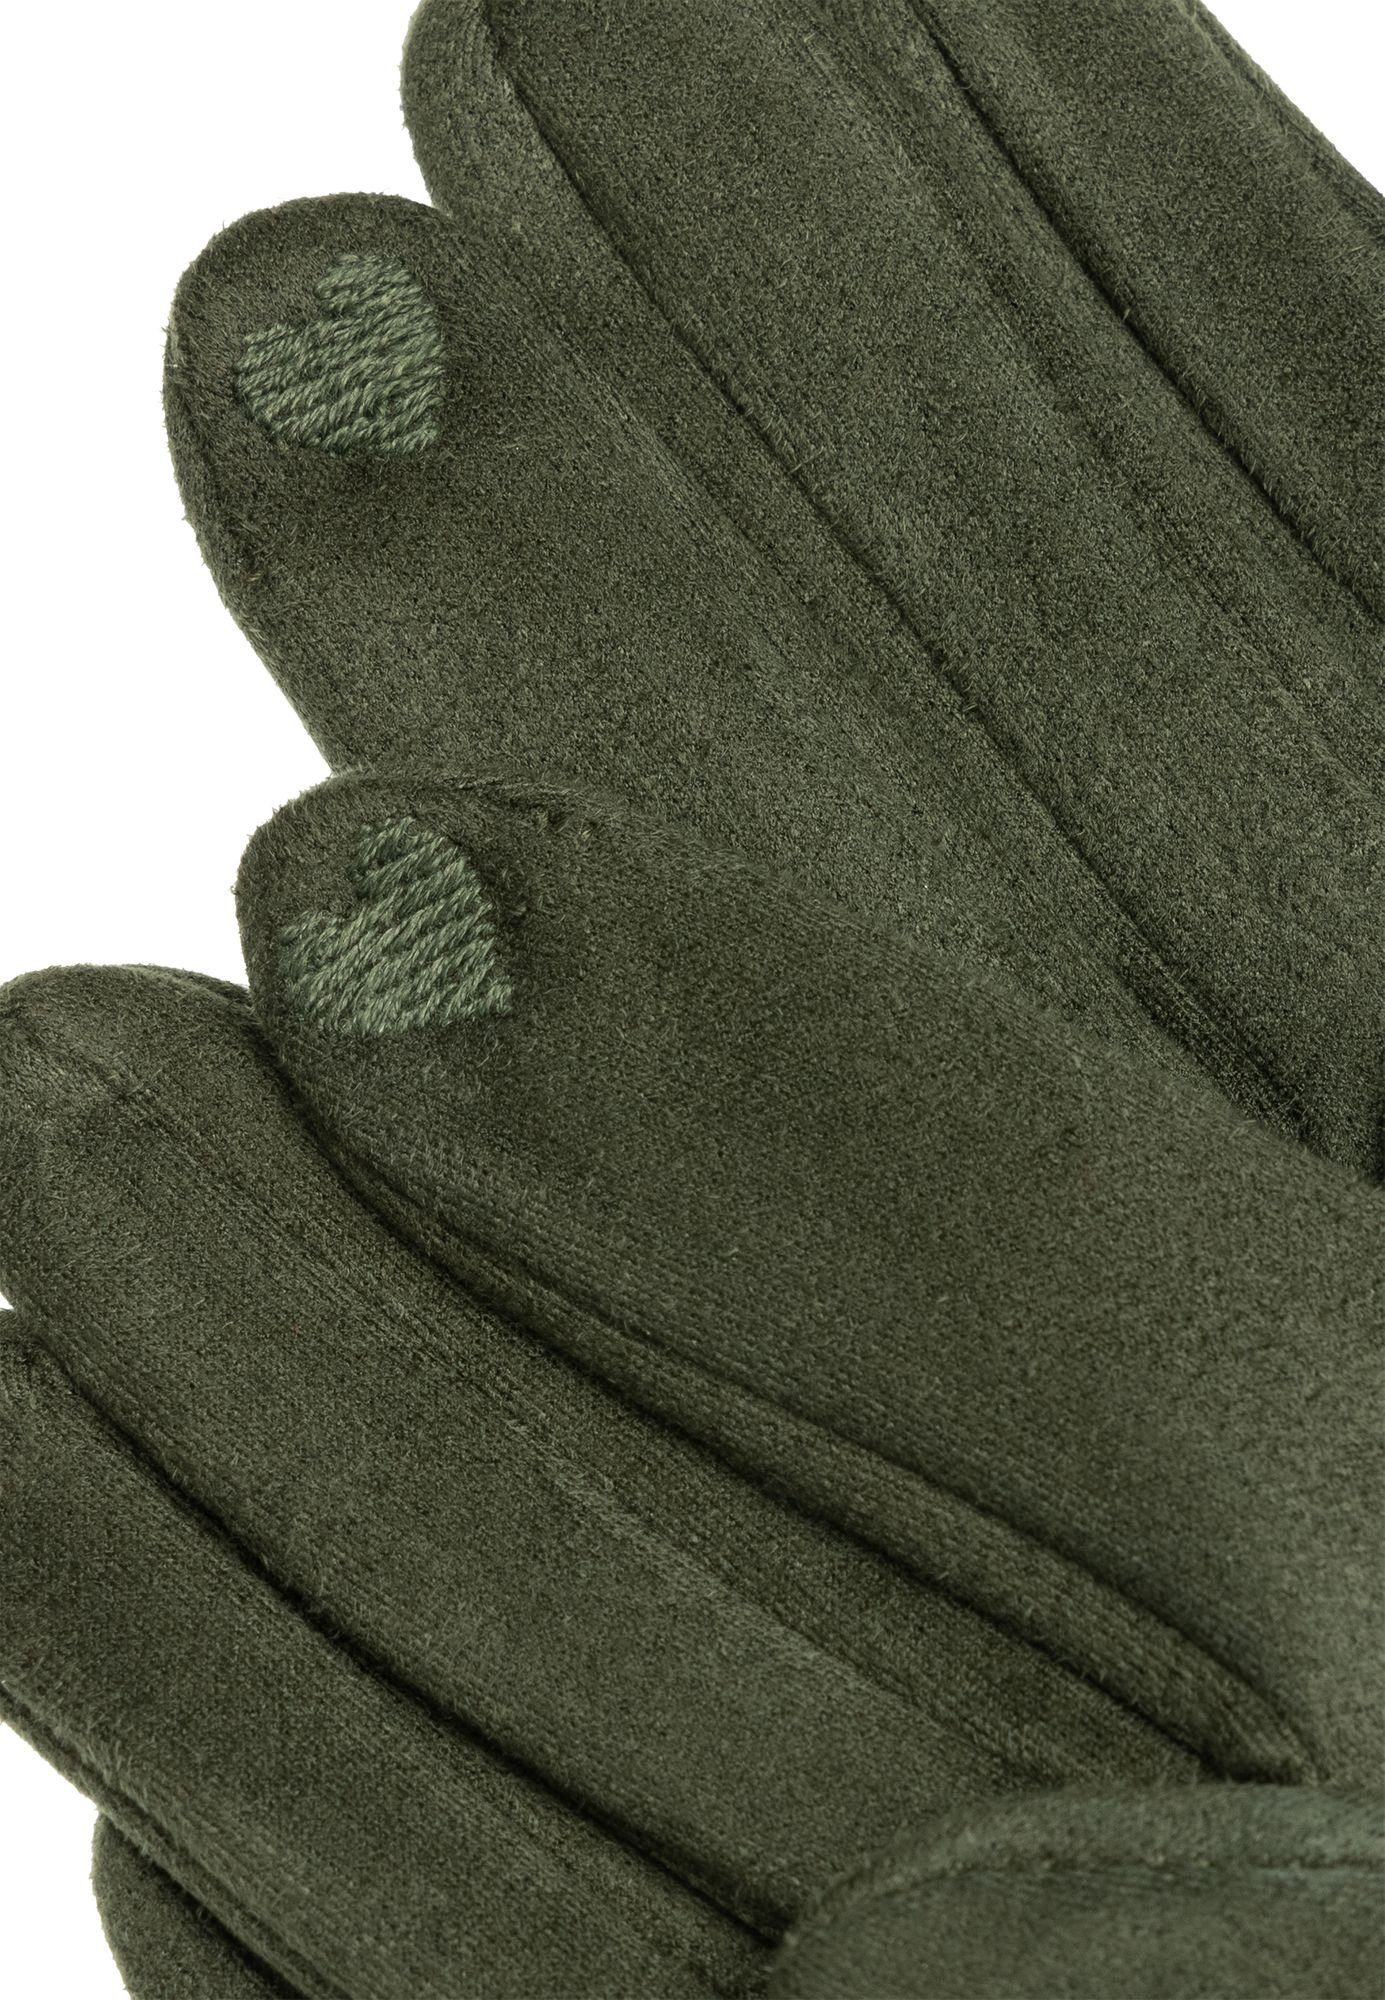 Winter oliv GLV013 Handschuhe Caspar uni elegante grün Strickhandschuhe klassisch Damen